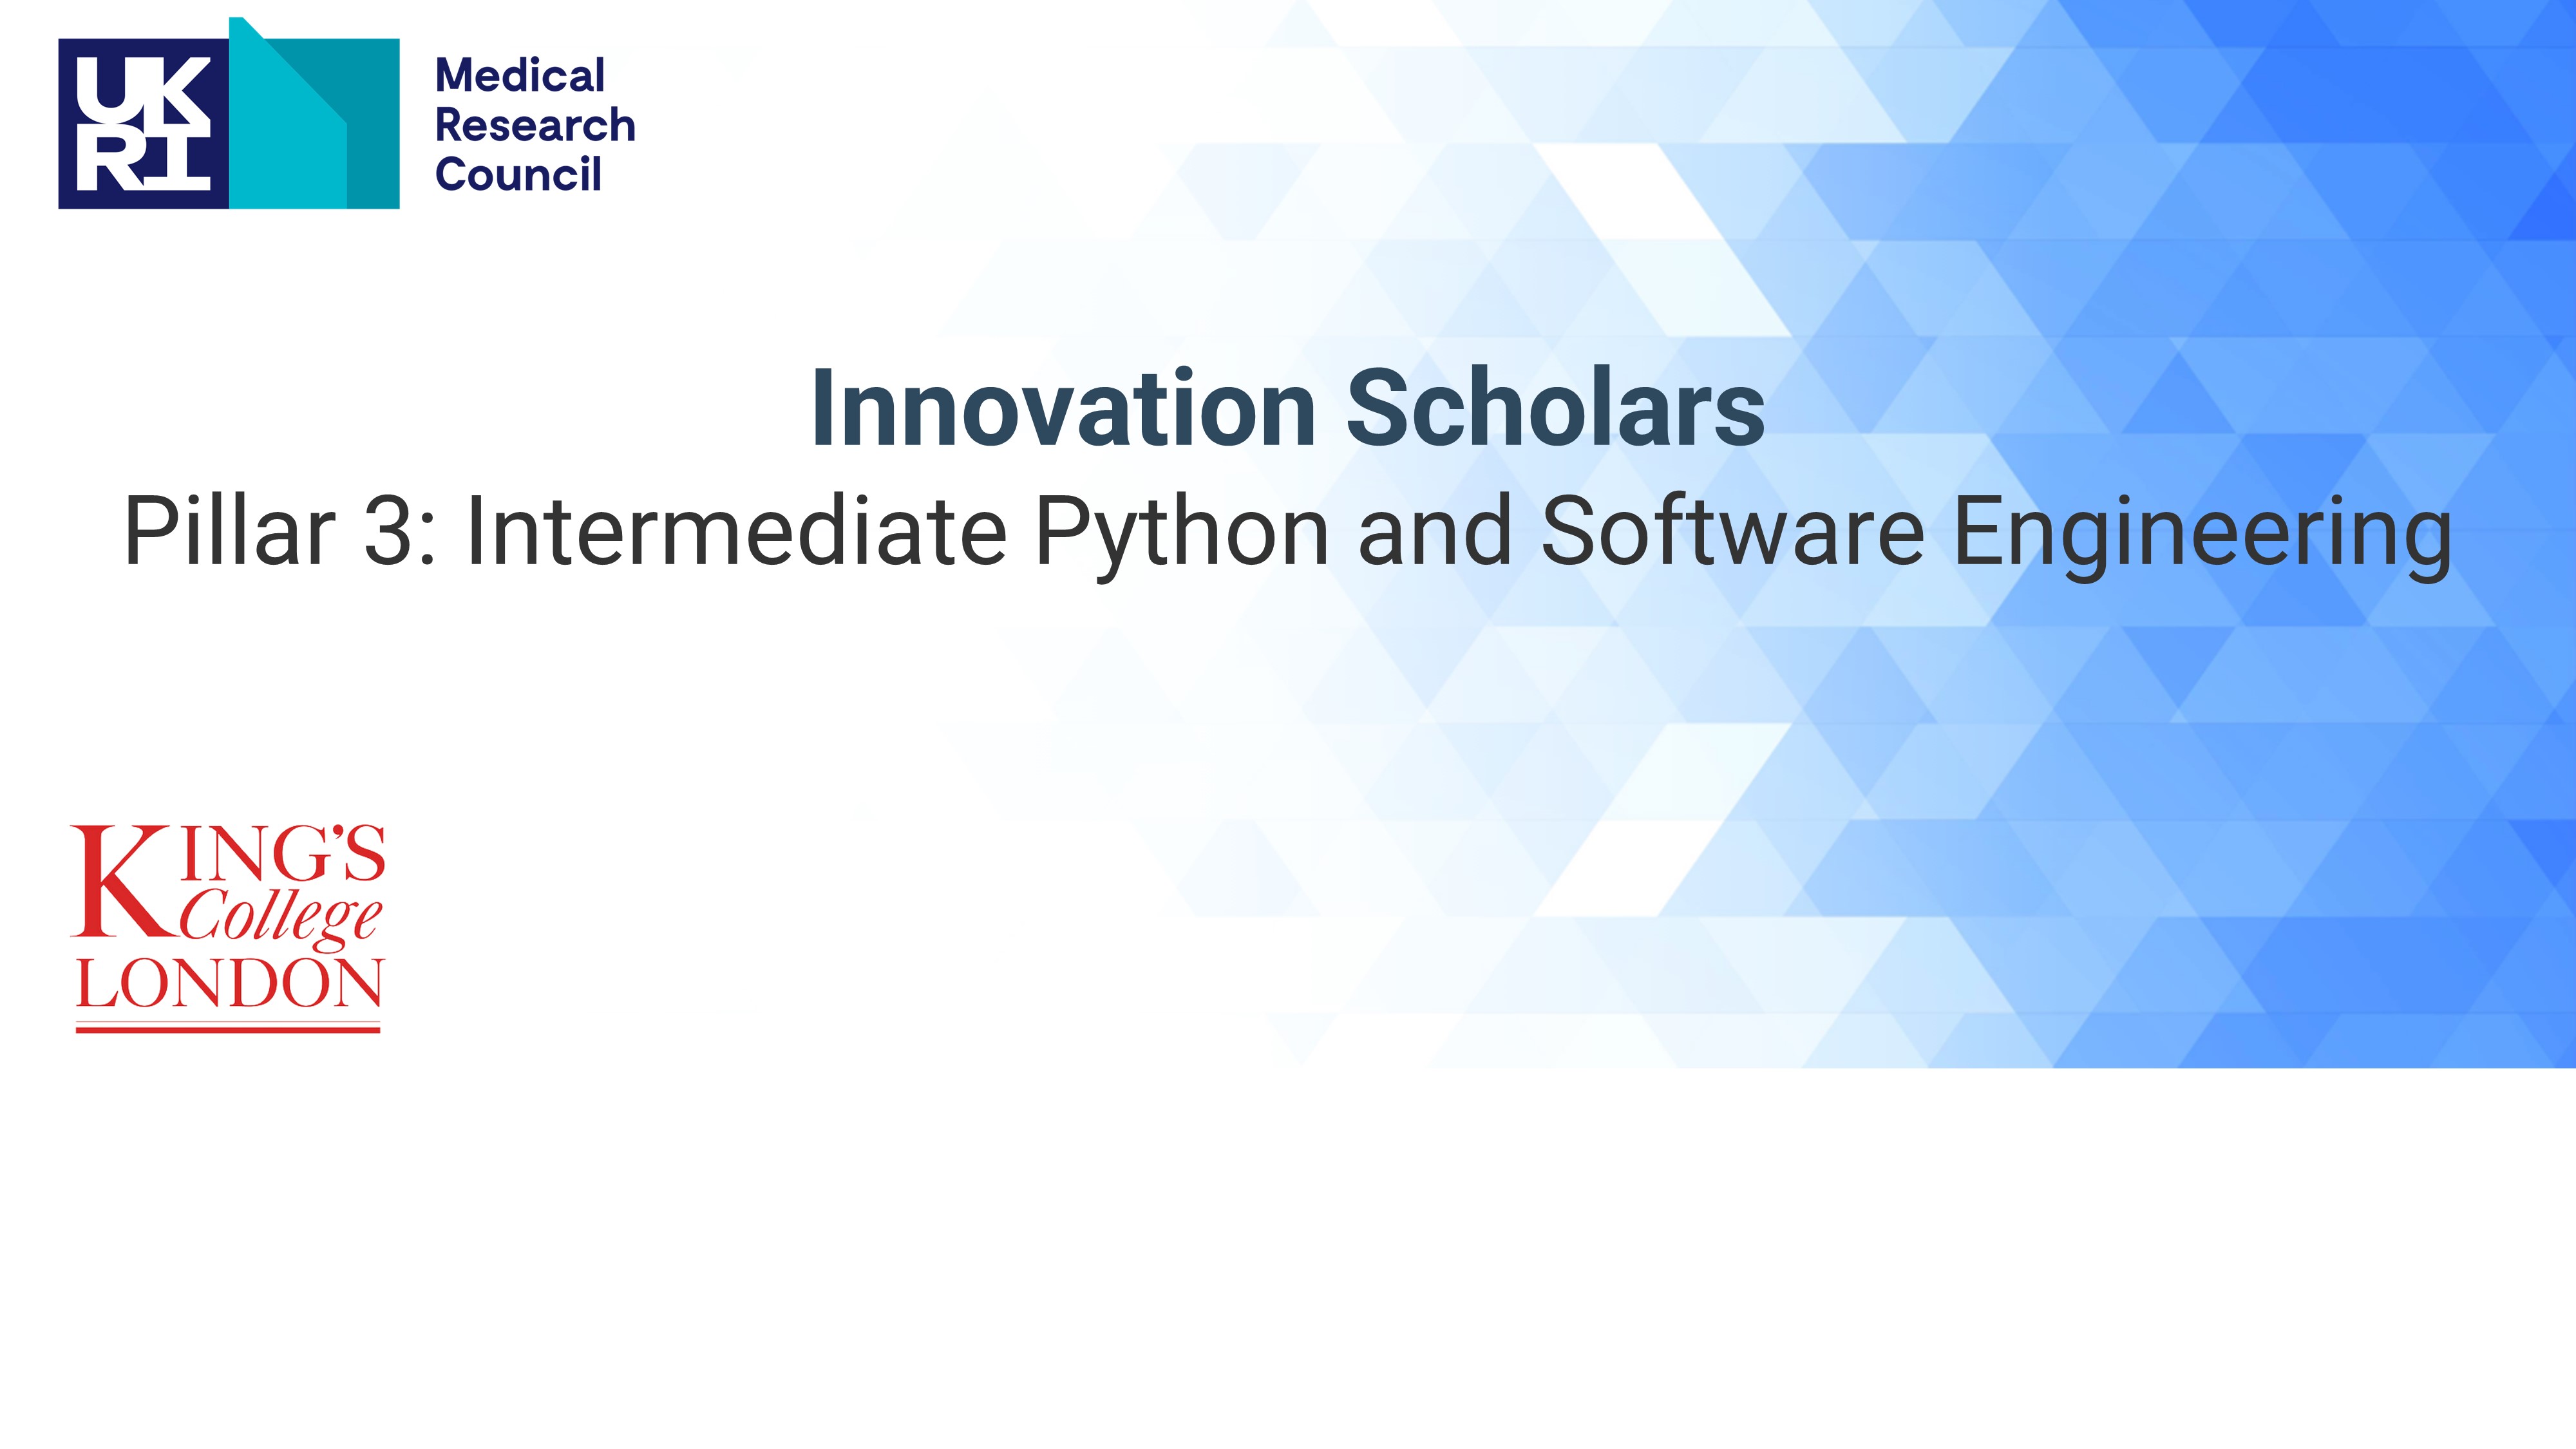 Intermediate Python and Software Engineering